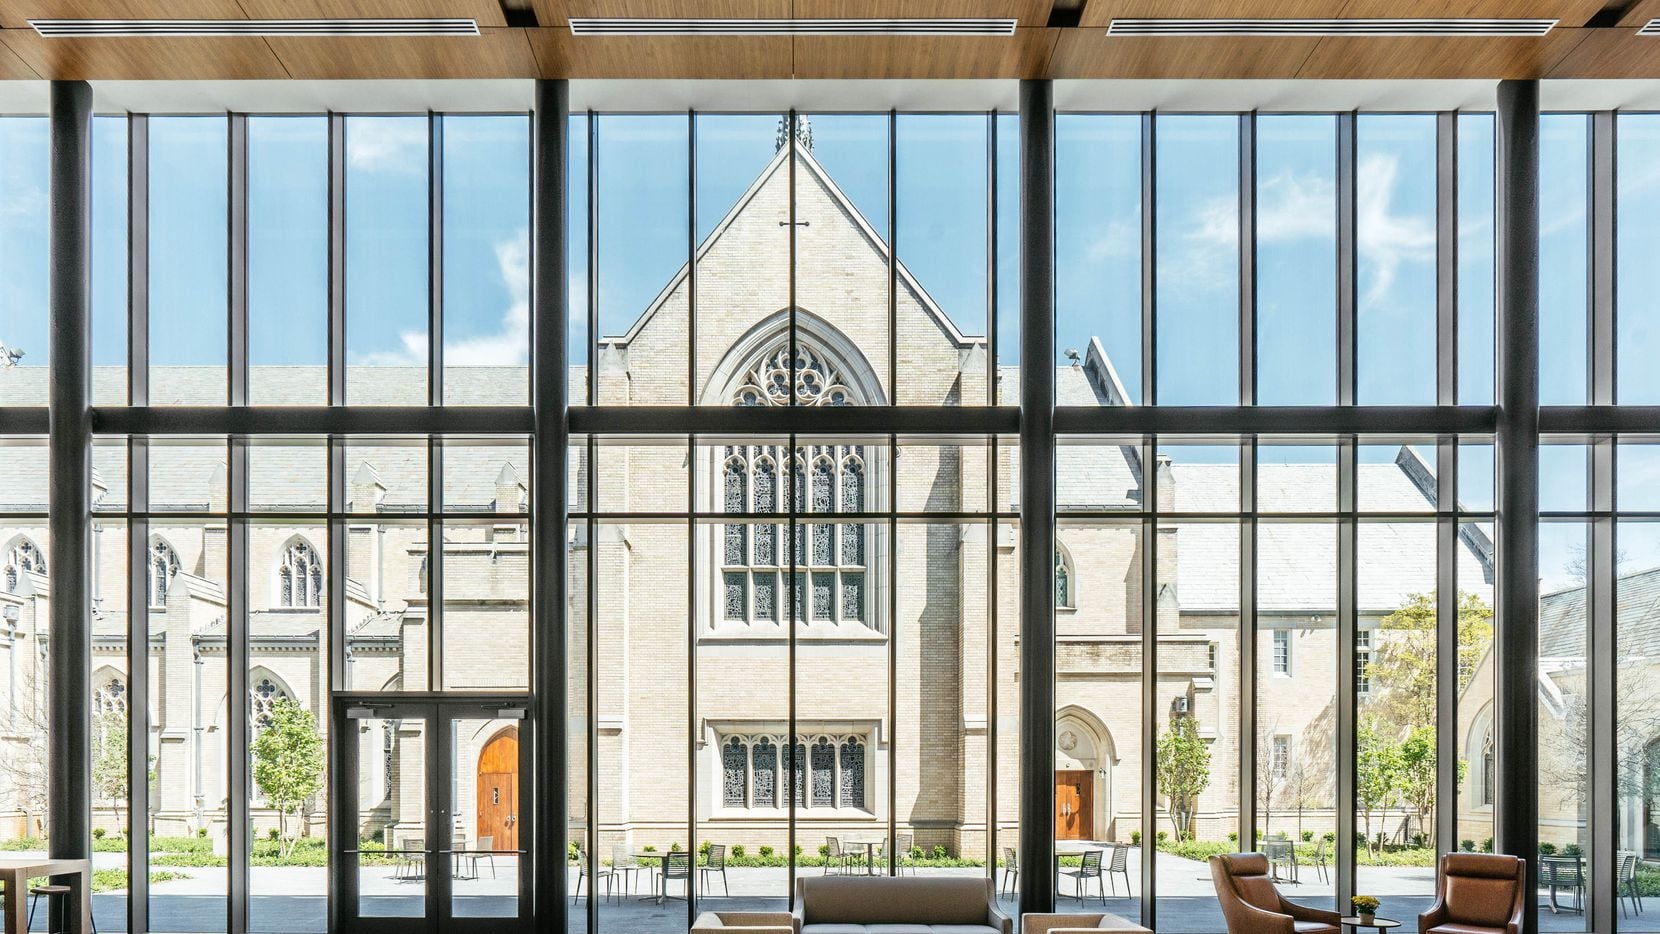 Highland Park Presbyterian Church, Omniplan Architects, 2021.